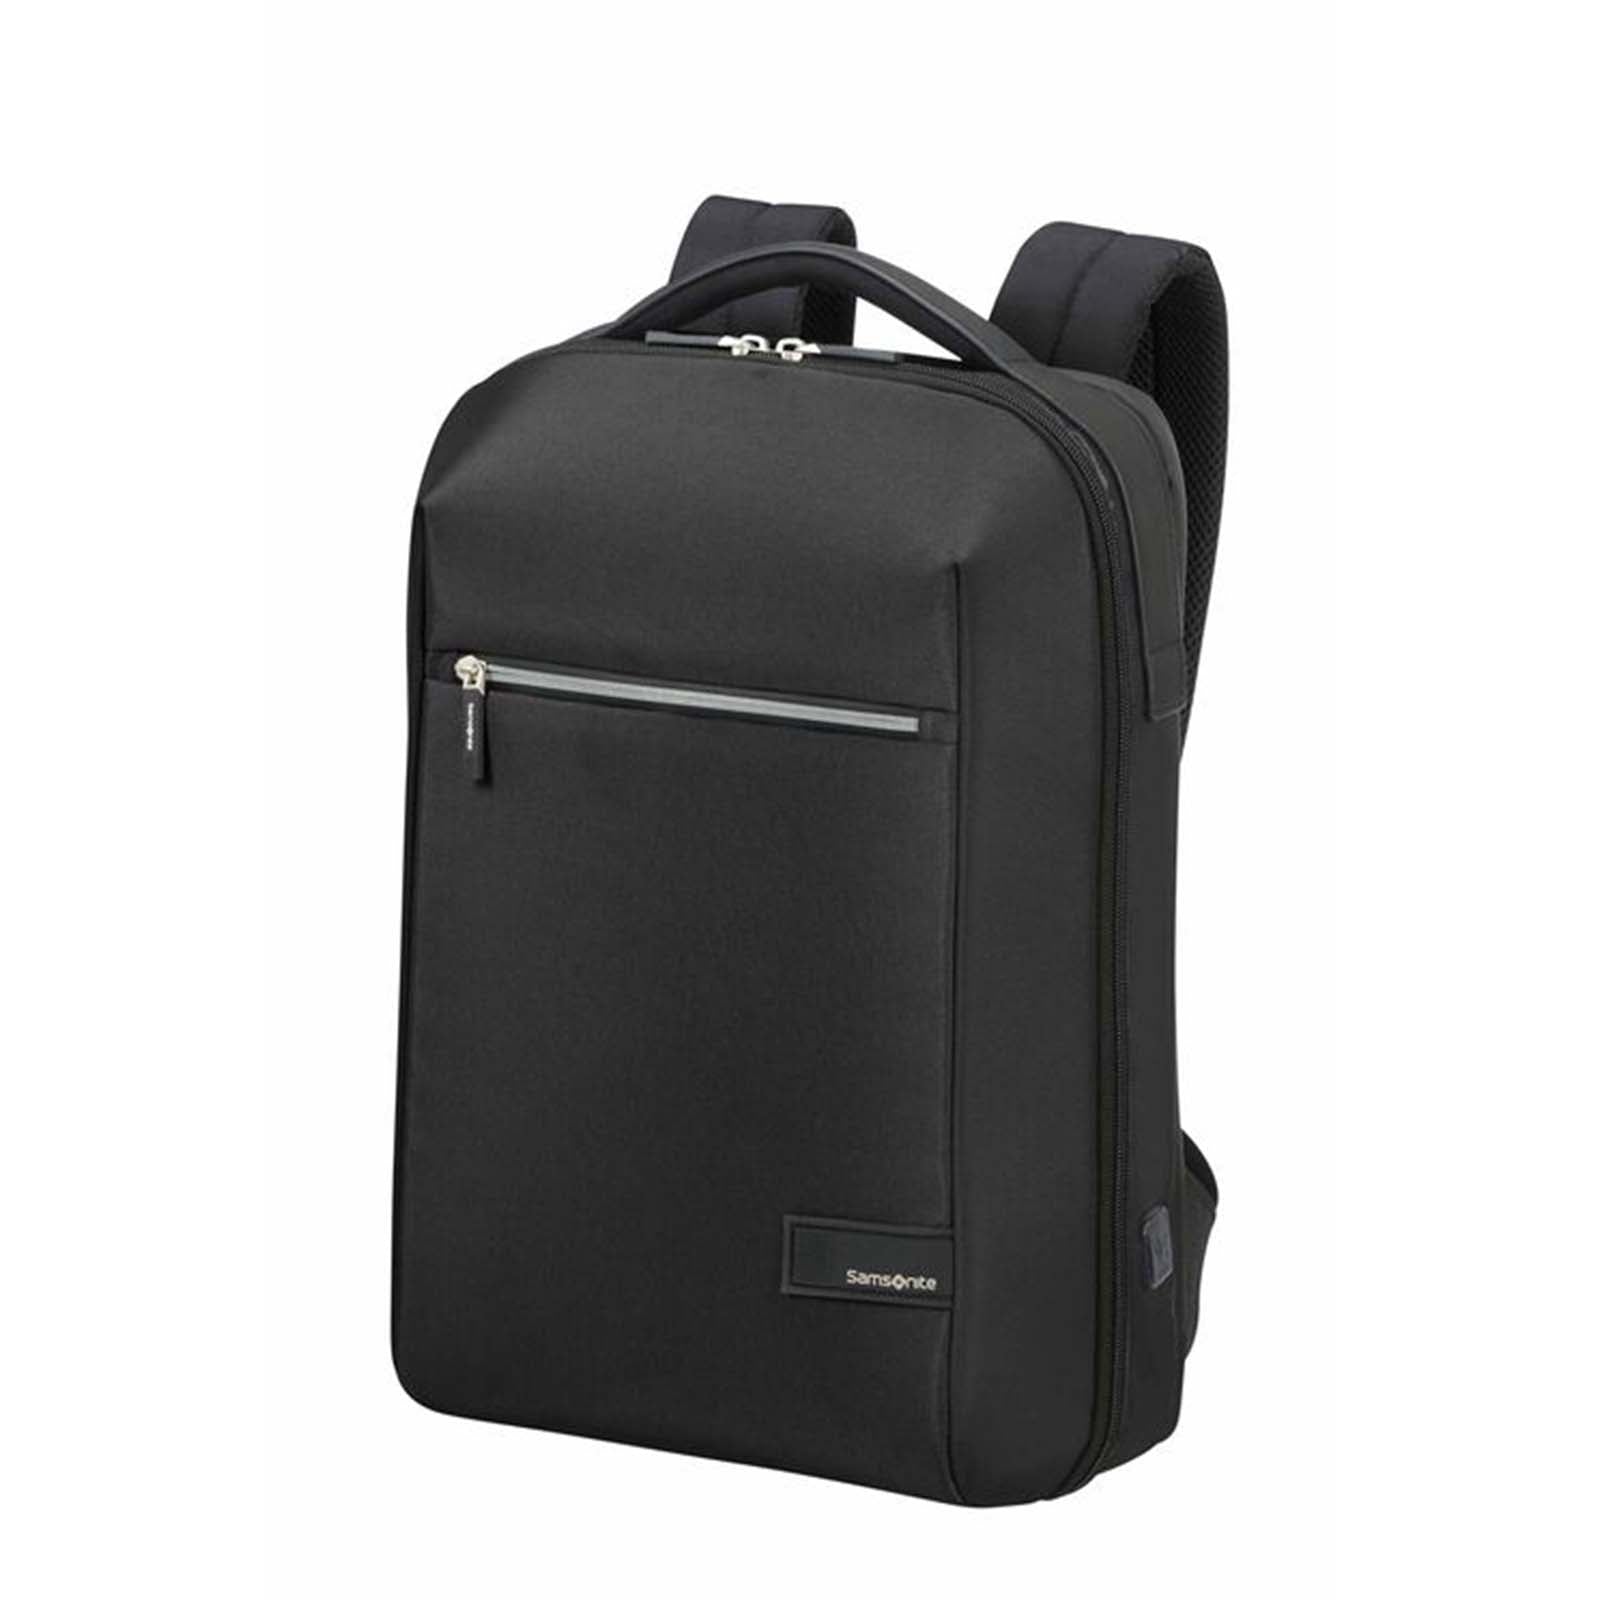 Samsonite Litepoint 15.6 Inch Laptop Backpack Black